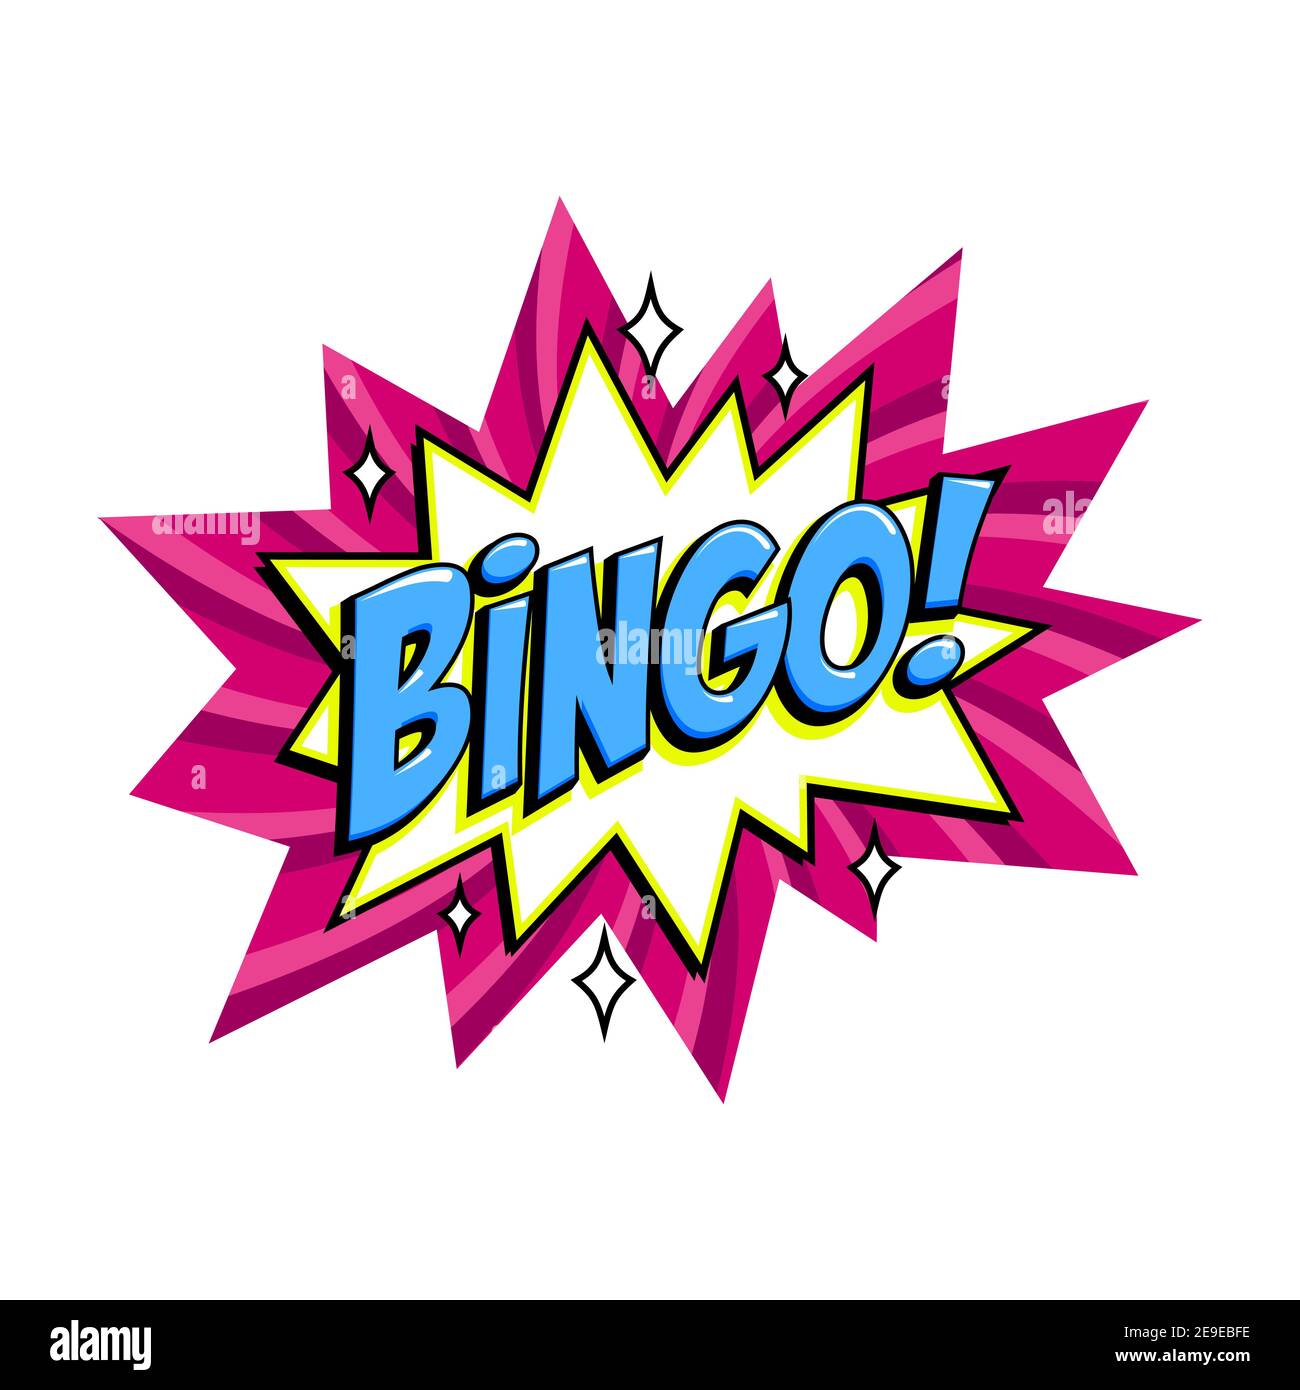 Bingo - Lotterie rosa Vektor-Banner. Lotterie-Spiel Hintergrund in Comic Pop-Art-Stil. Cartoon Vektorgrafik. Stock Vektor